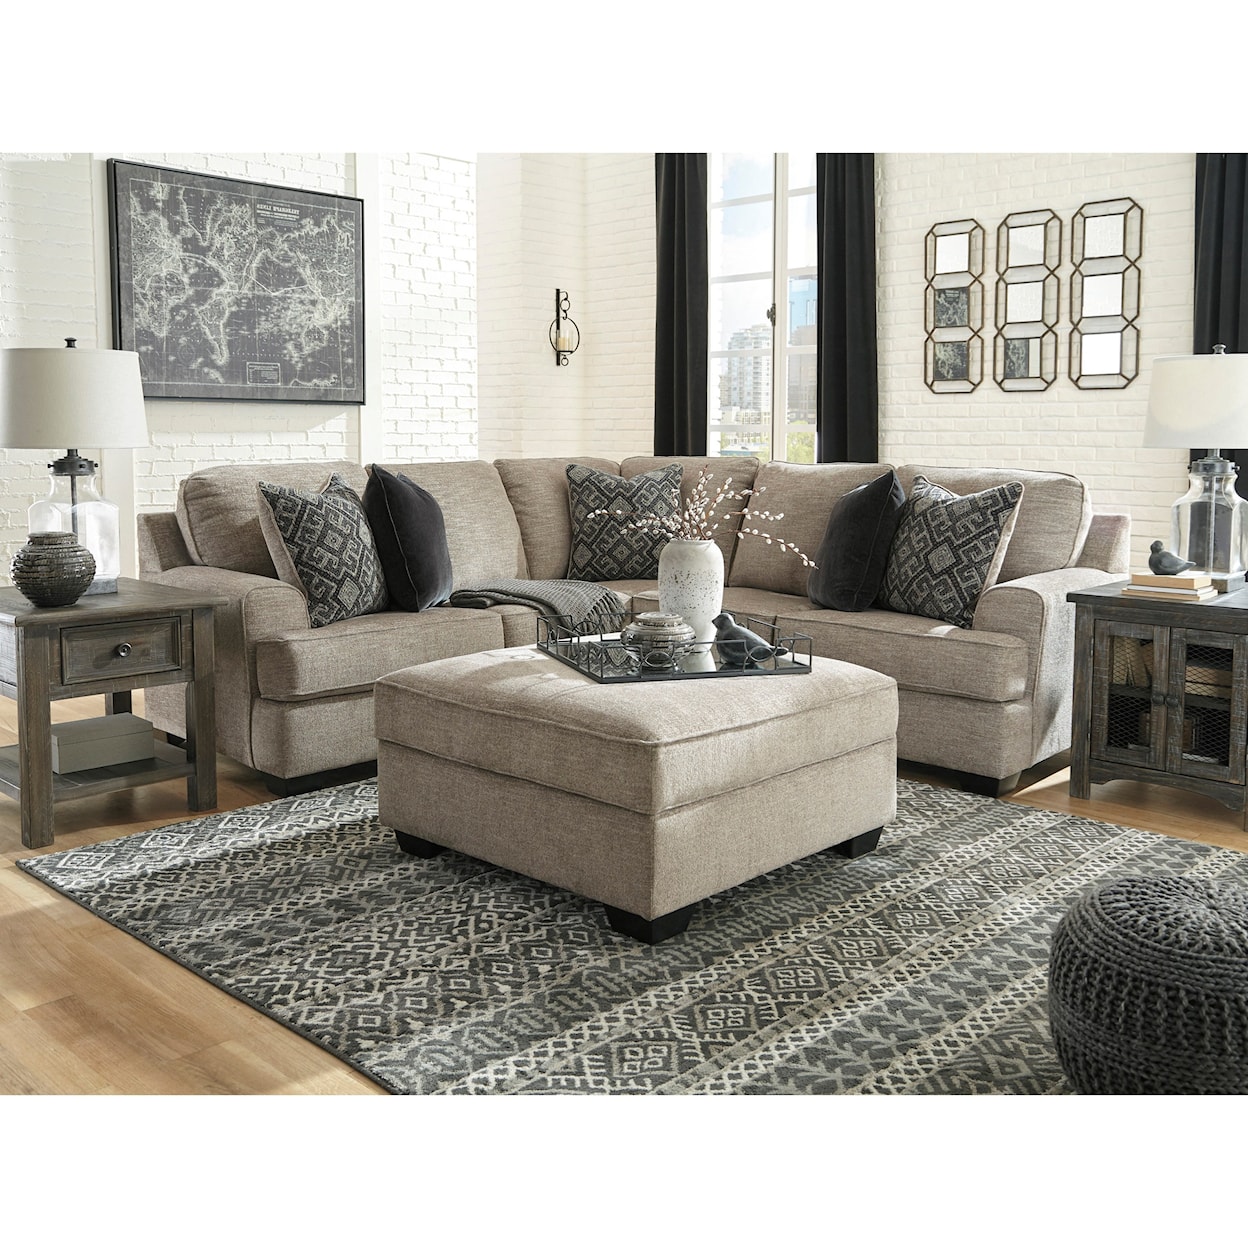 Benchcraft Bovarian Stationary Living Room Group